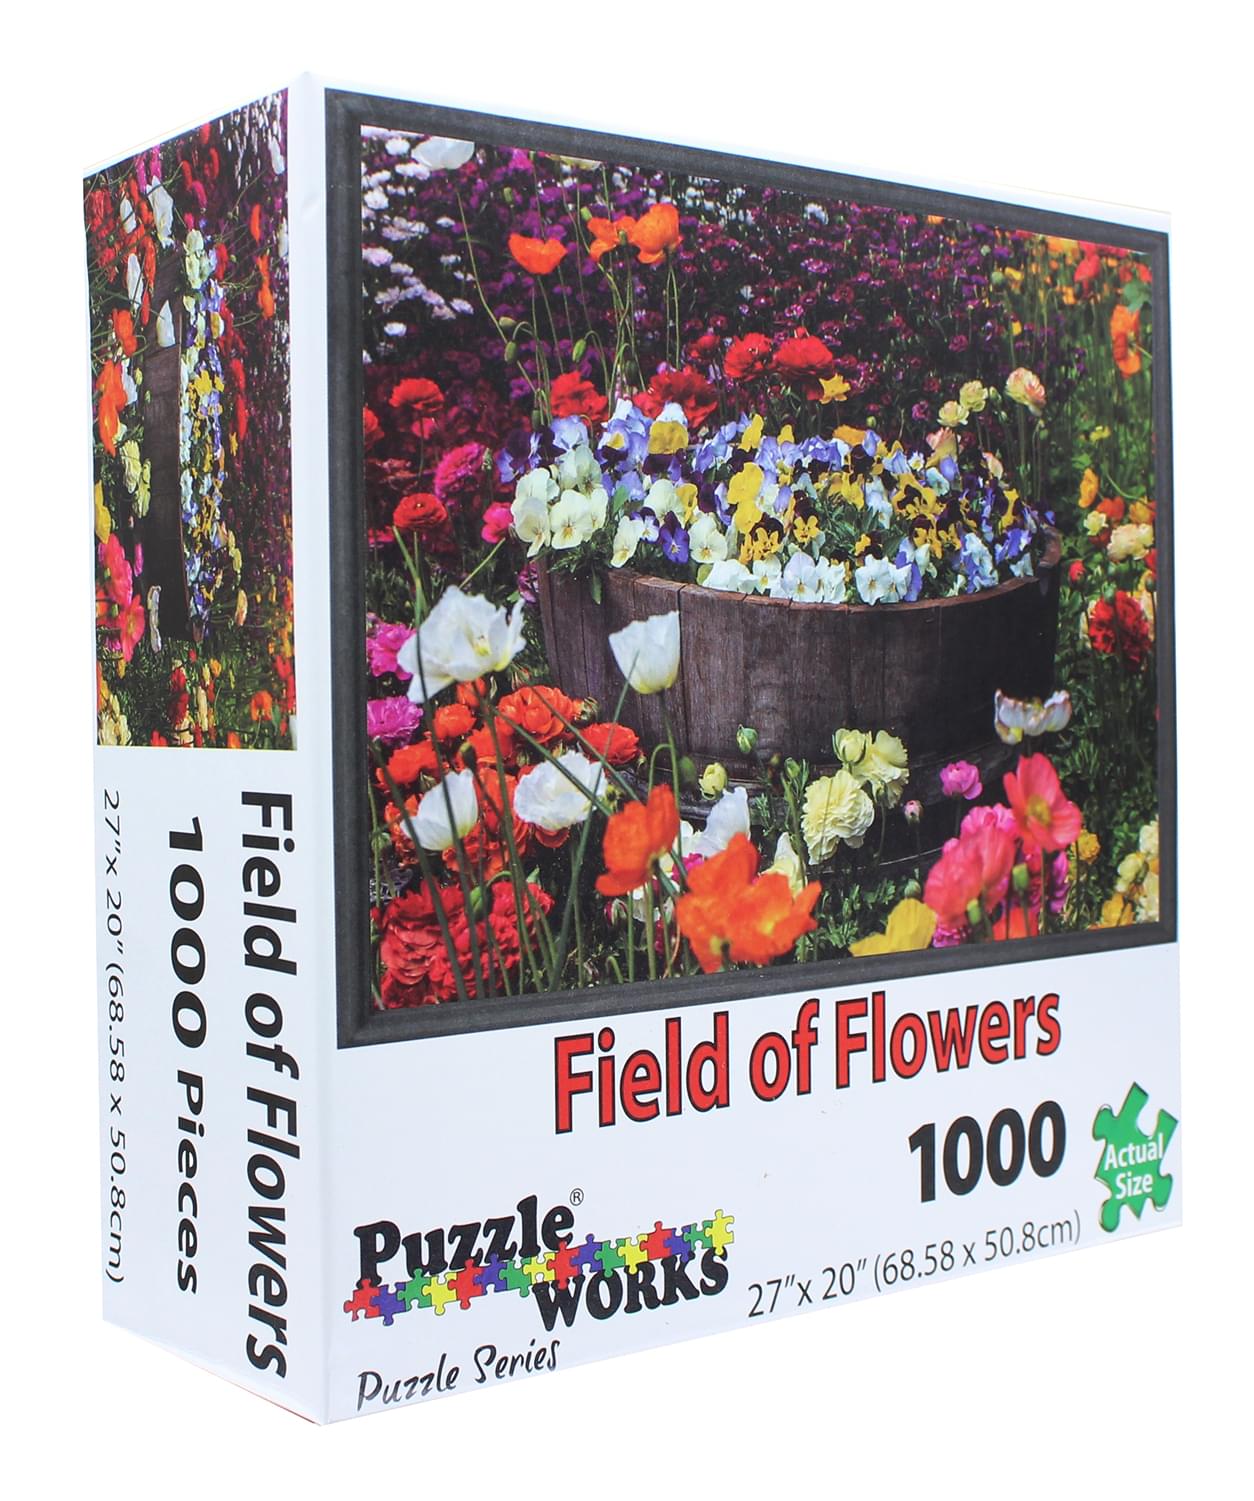 PuzzleWorks 1000 Piece Jigsaw Puzzle | Field Of Flowers